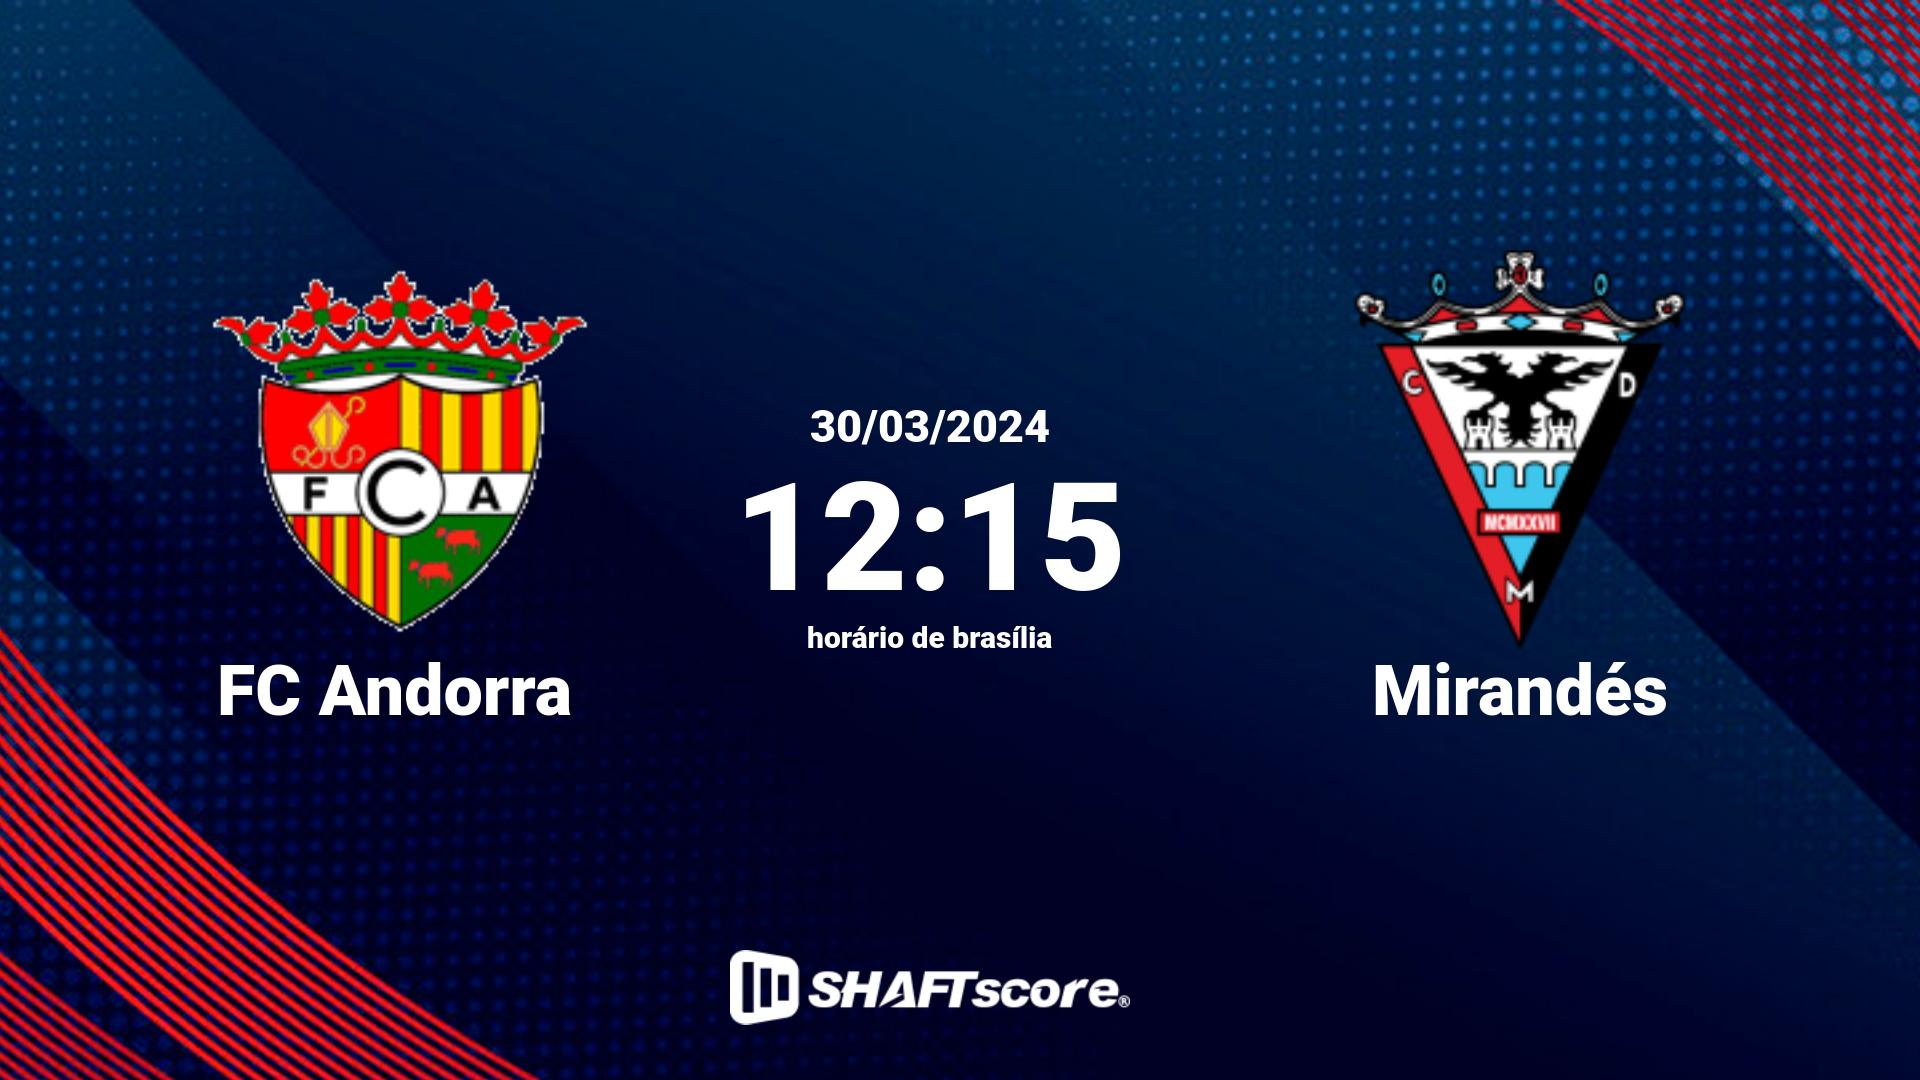 Estatísticas do jogo FC Andorra vs Mirandés 30.03 12:15